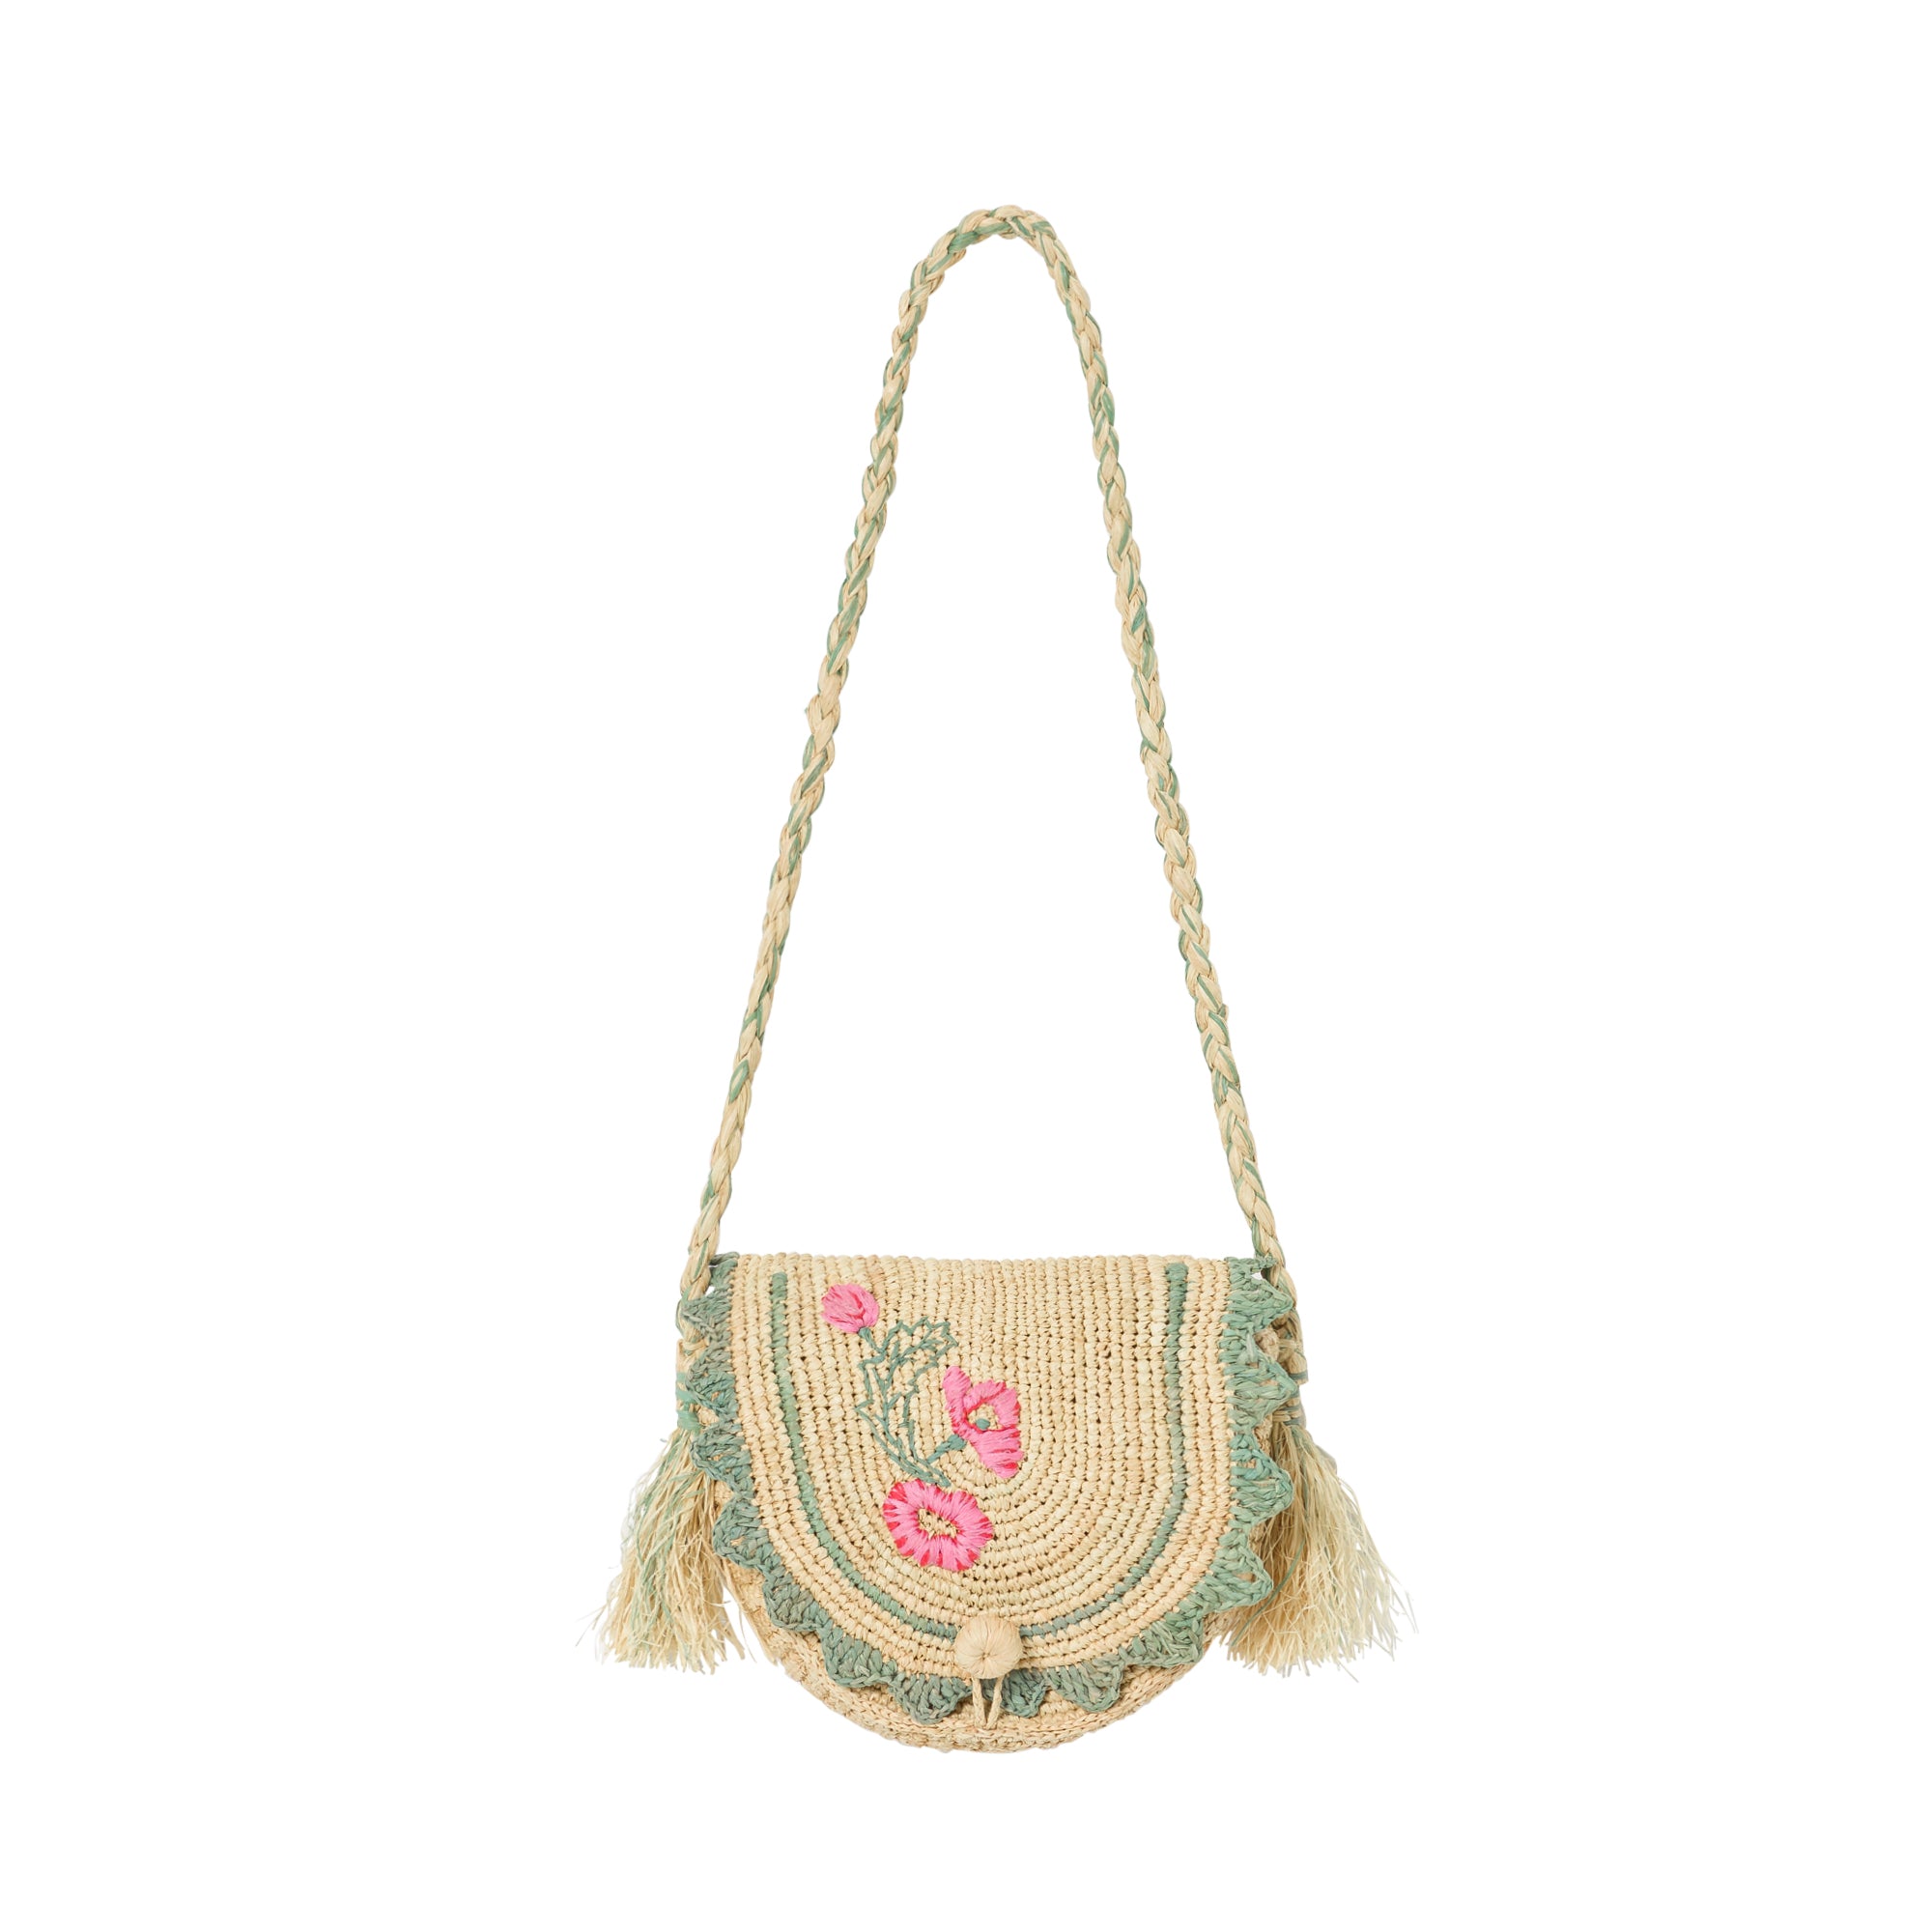 Girls' handbag, raffia